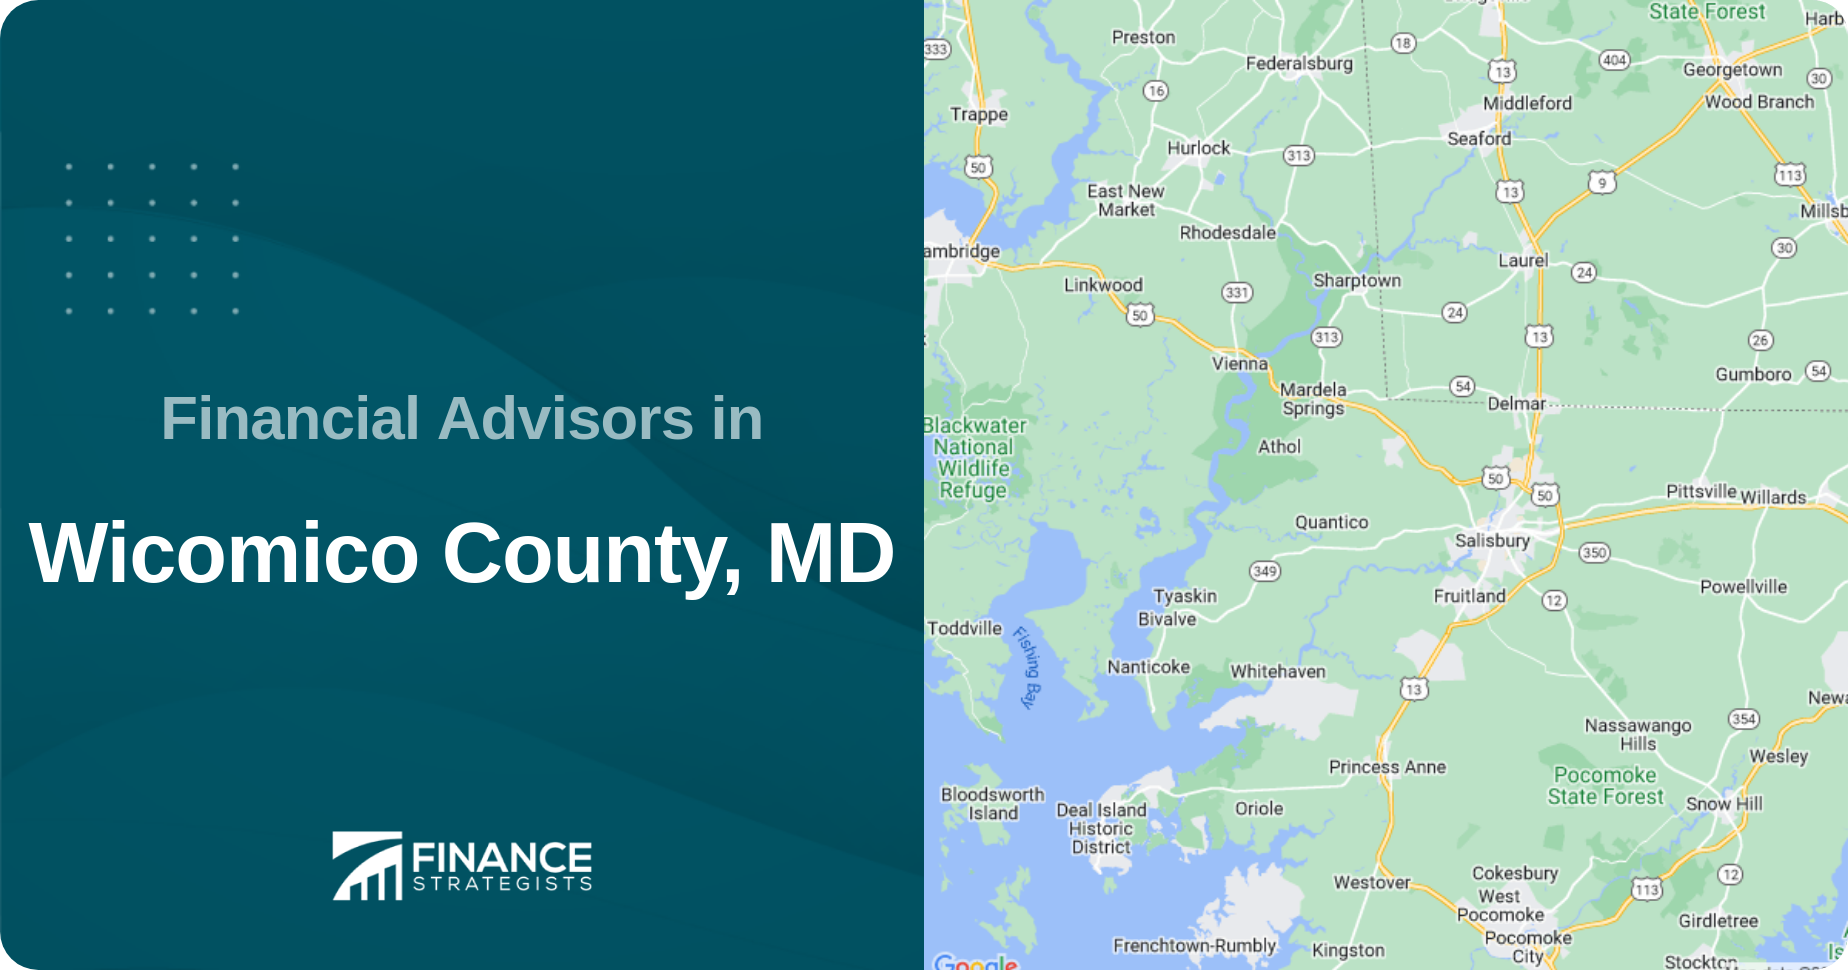 Financial Advisors in Wicomico County, MD